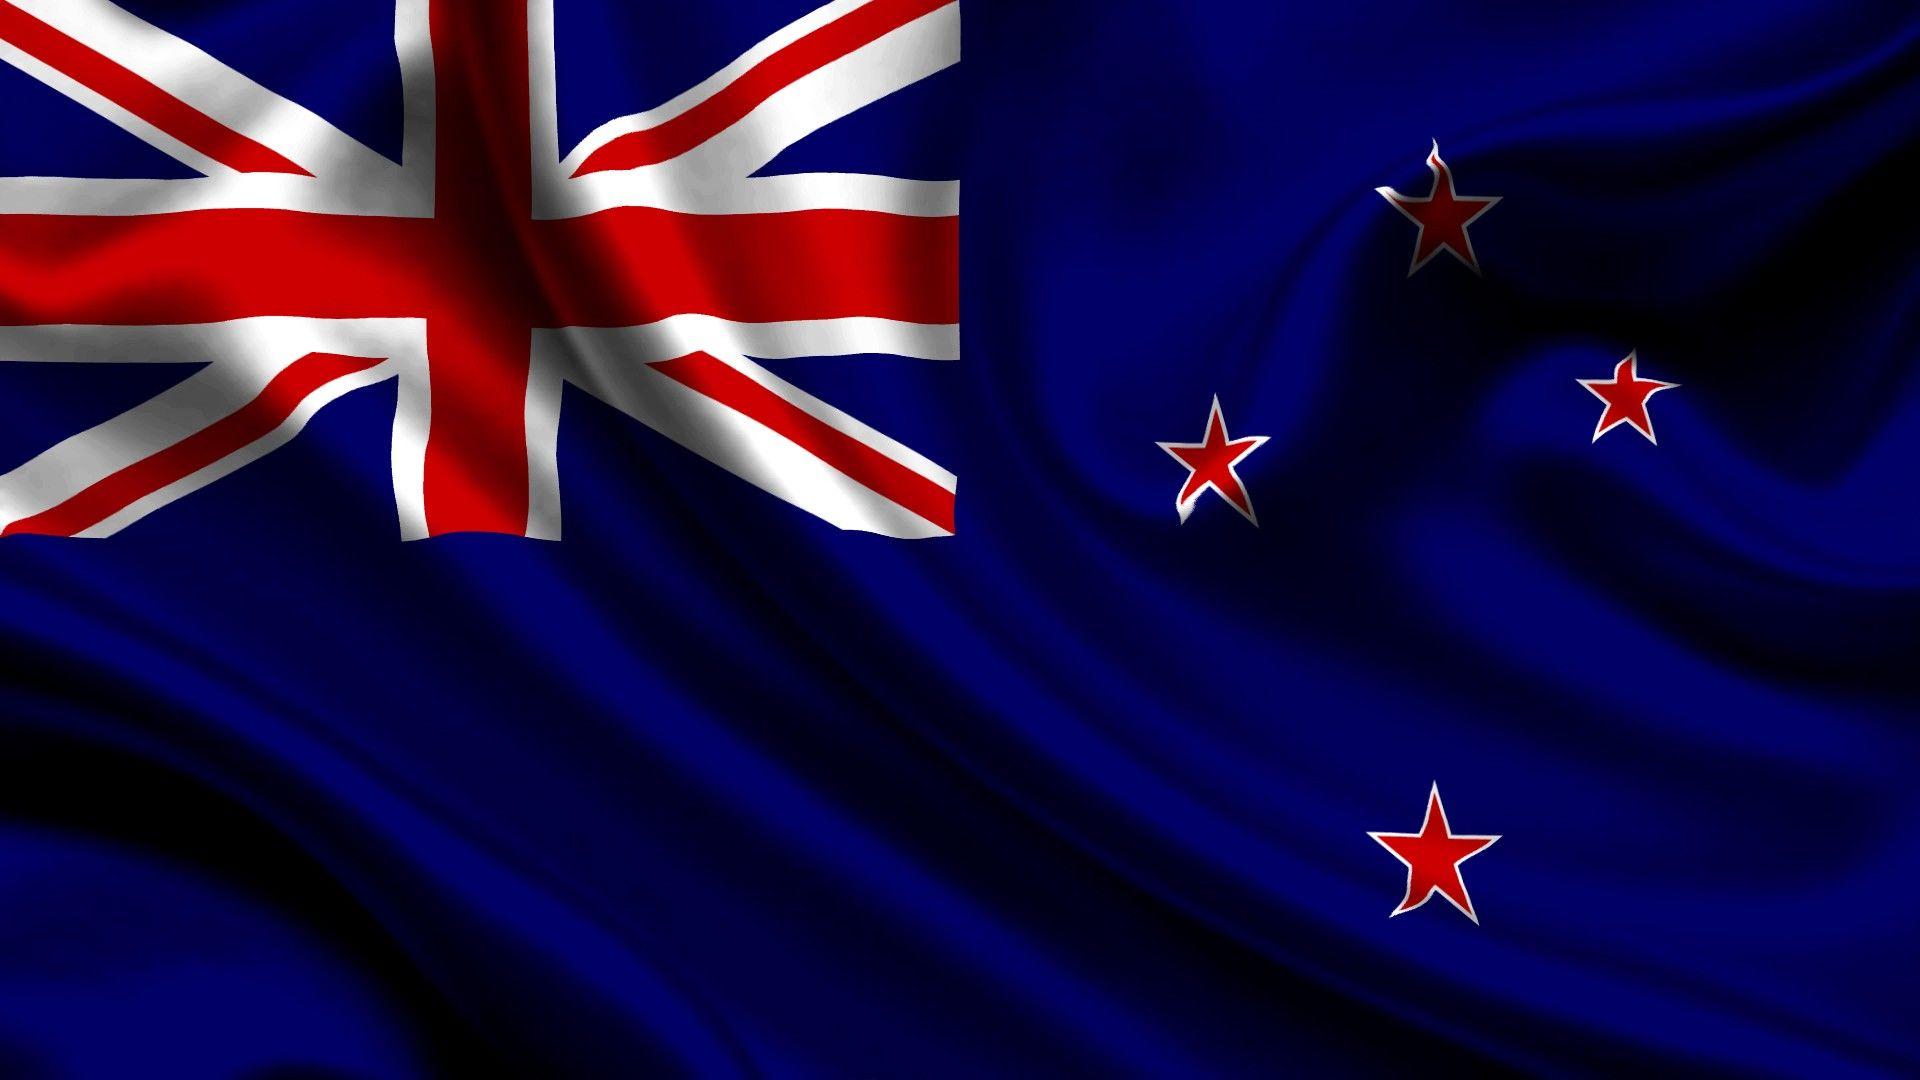 Flag of New Zealand wallpaper. Flags wallpaper. Flags